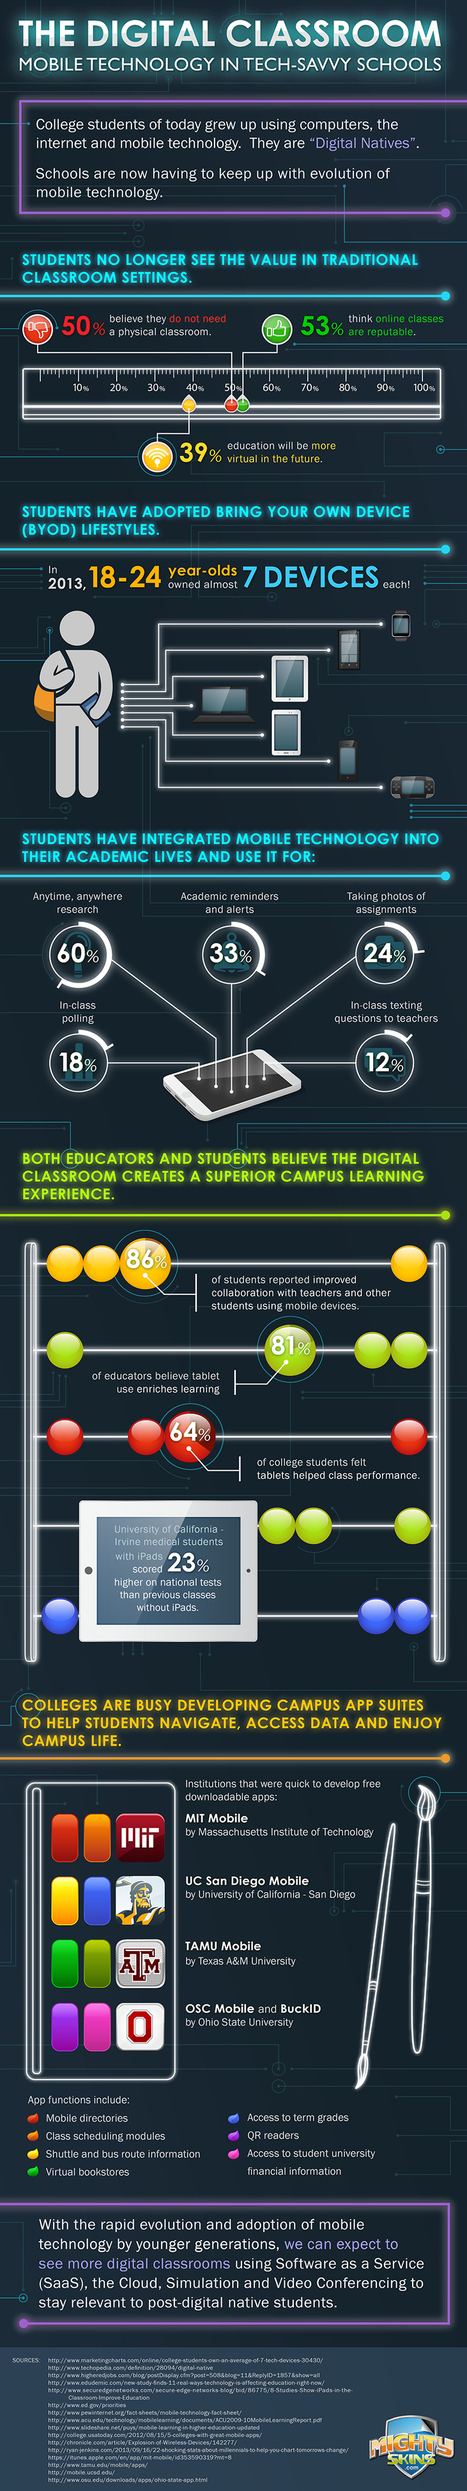 The Dawn of the Digital Classroom [Infographic] | iGeneration - 21st Century Education (Pedagogy & Digital Innovation) | Scoop.it